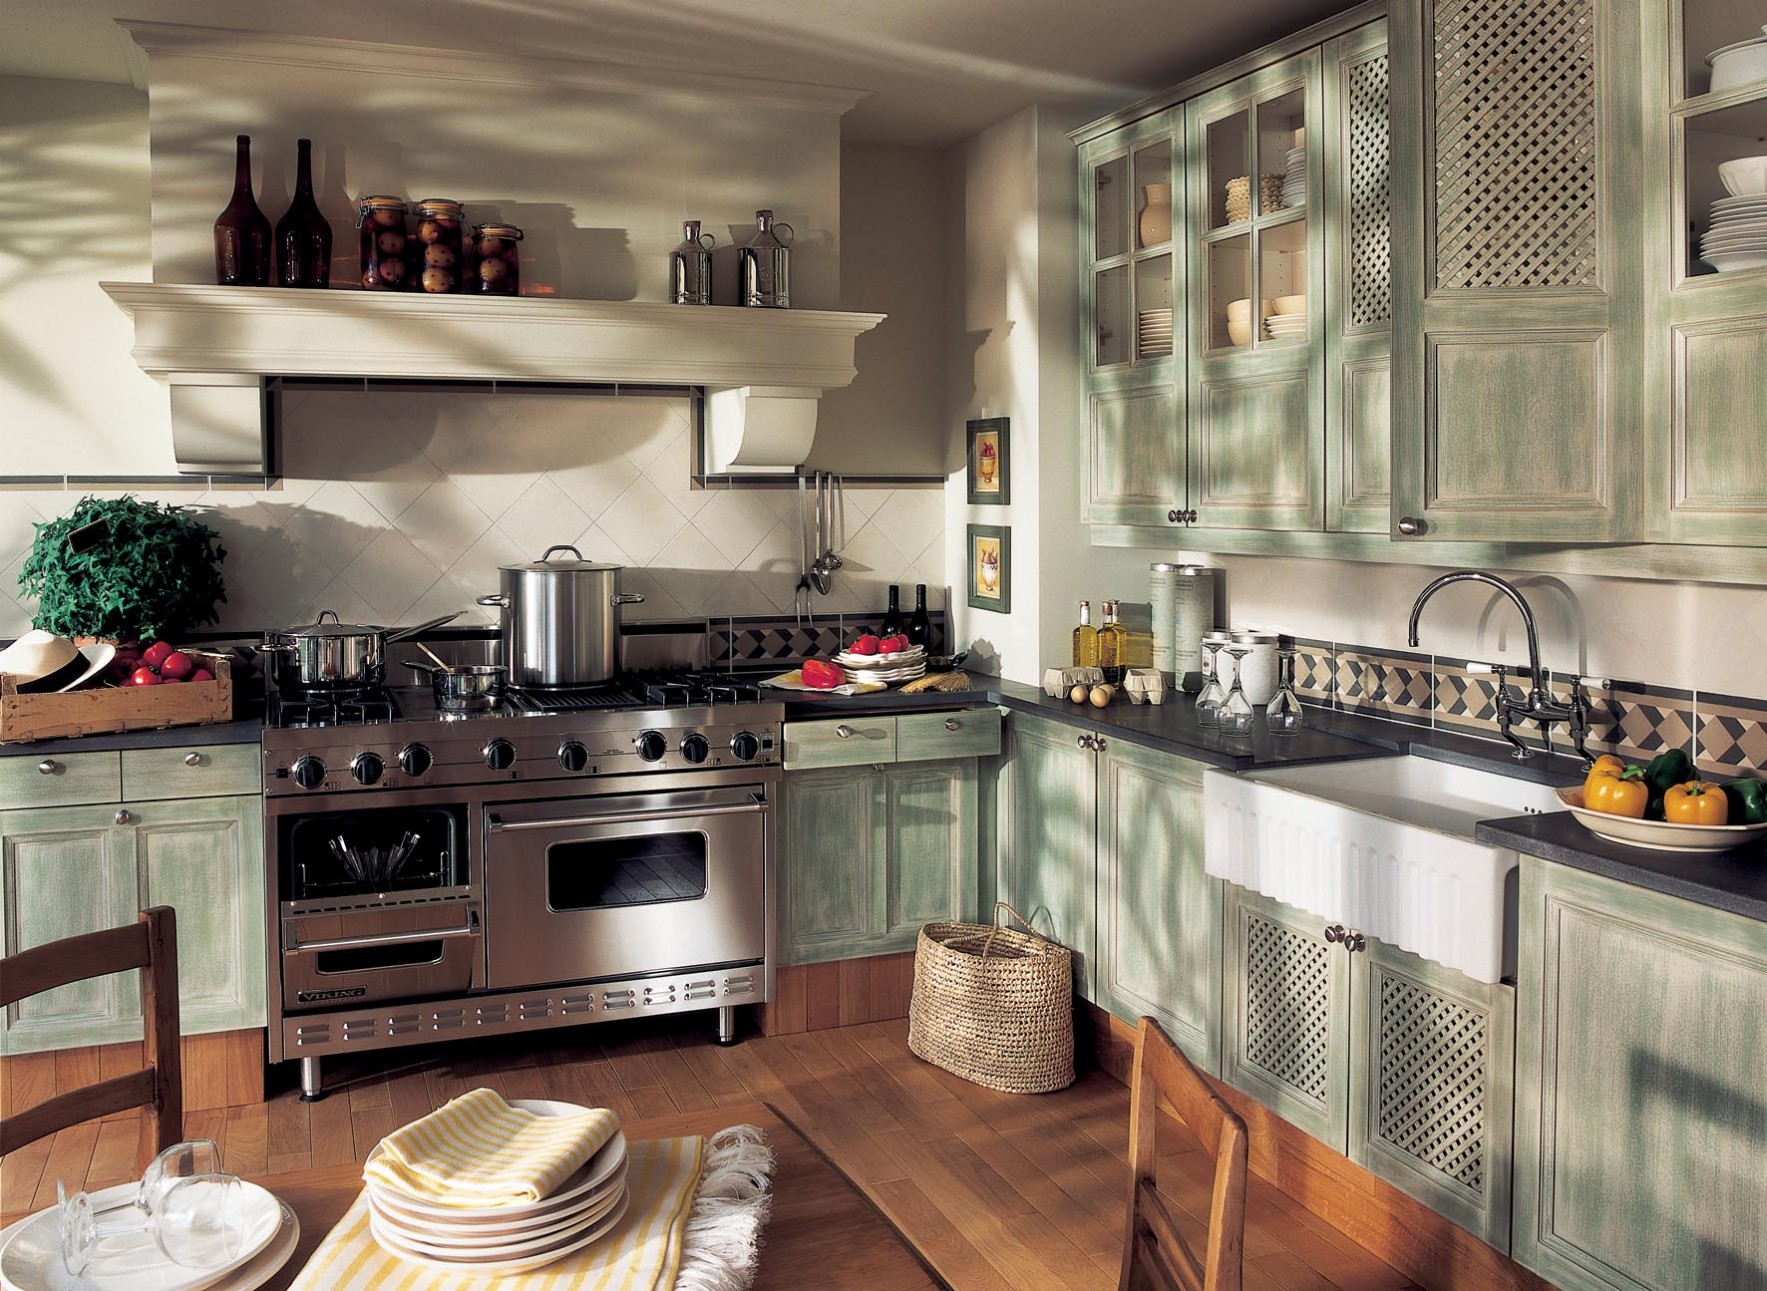 French Provençal kitchen designed for modern lifestyles